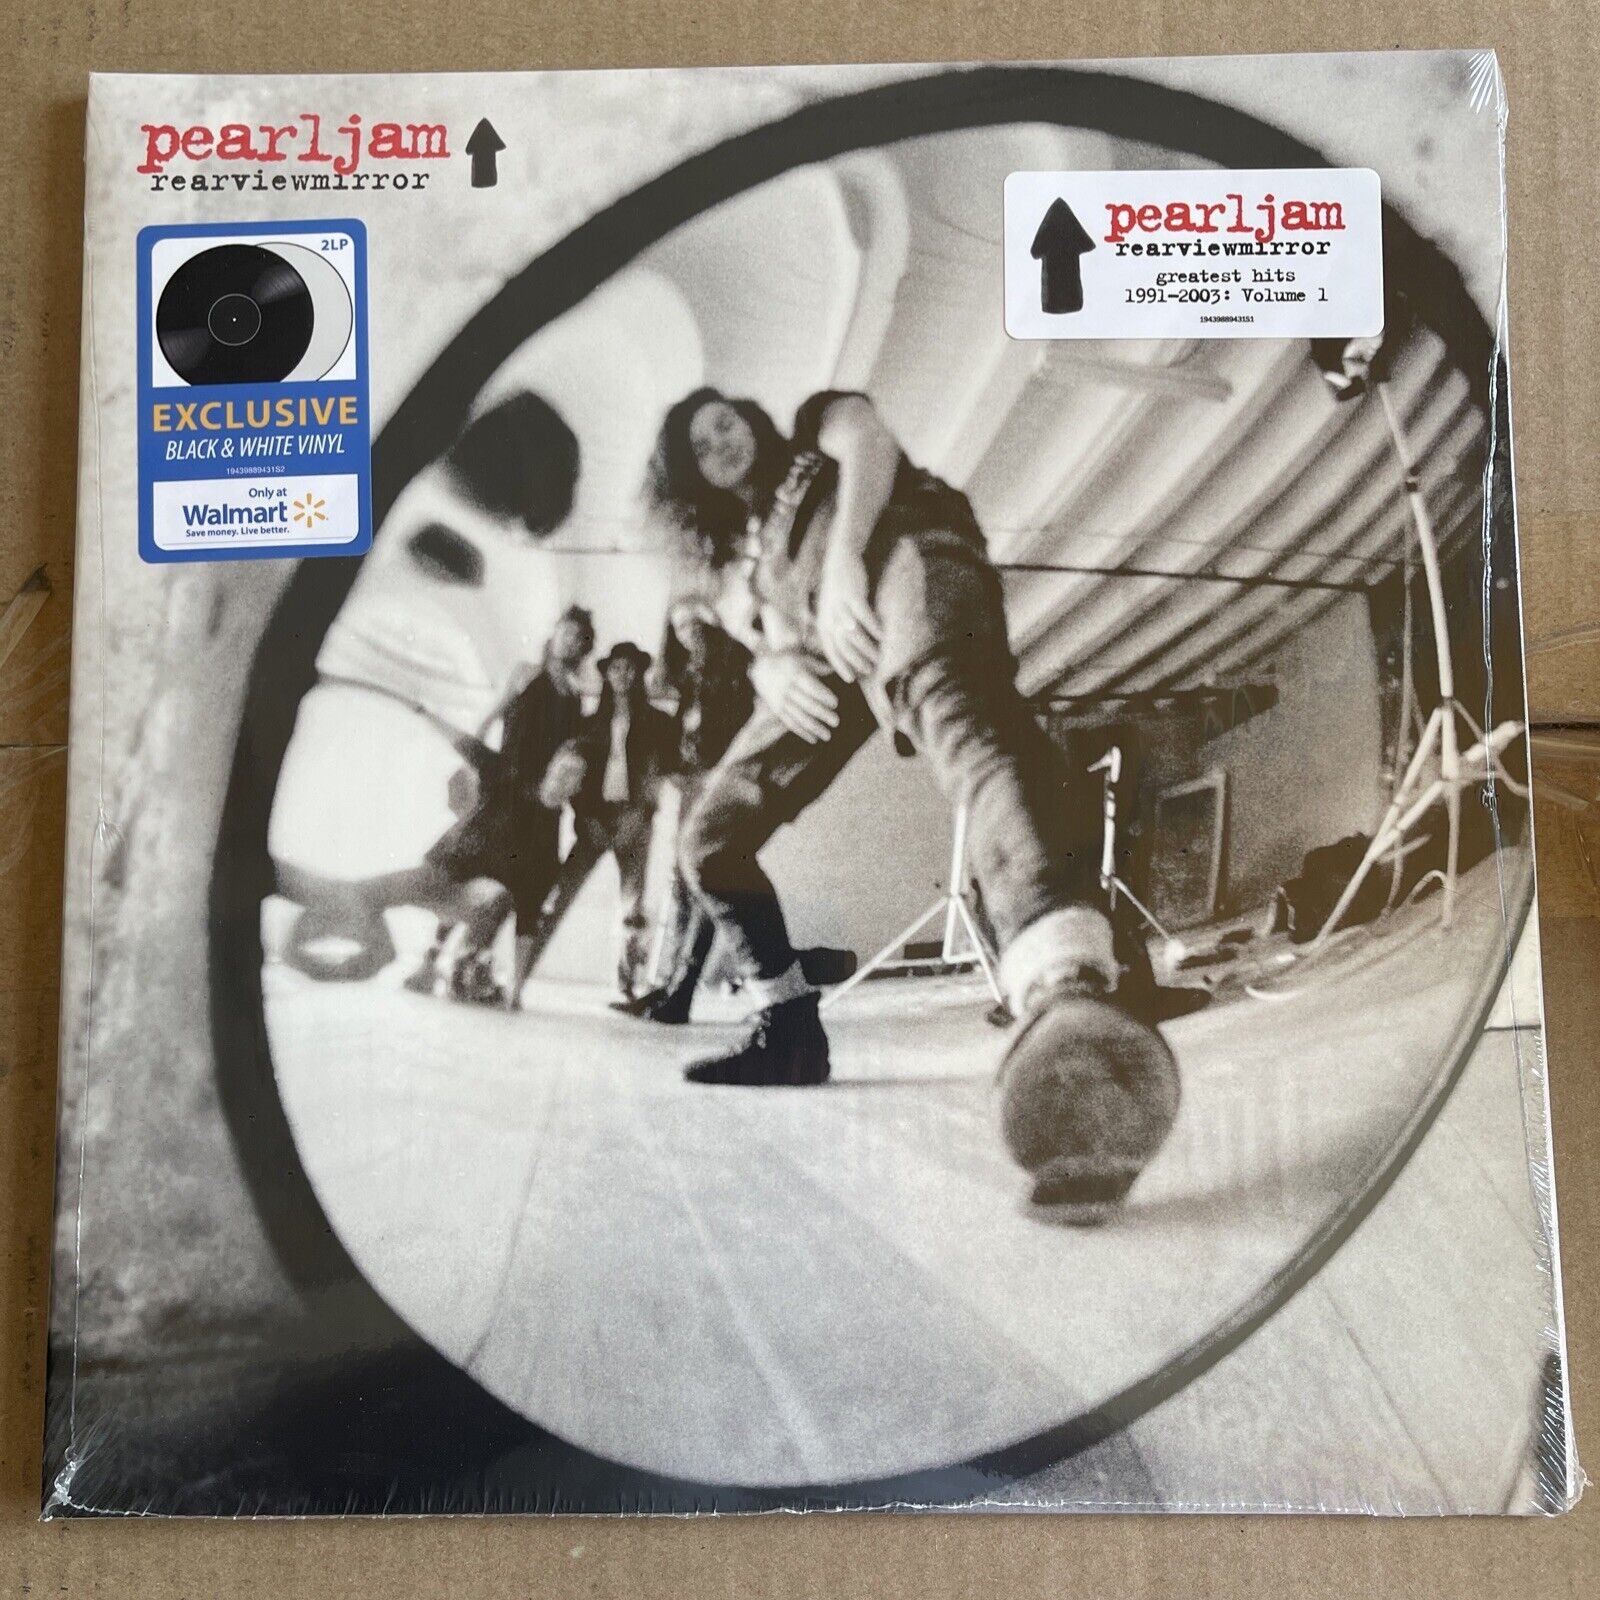 Pearl Jam : rearviewmirror 1991-2003 Vol1 (Exclusive White & Black Vinyl LP) NEW